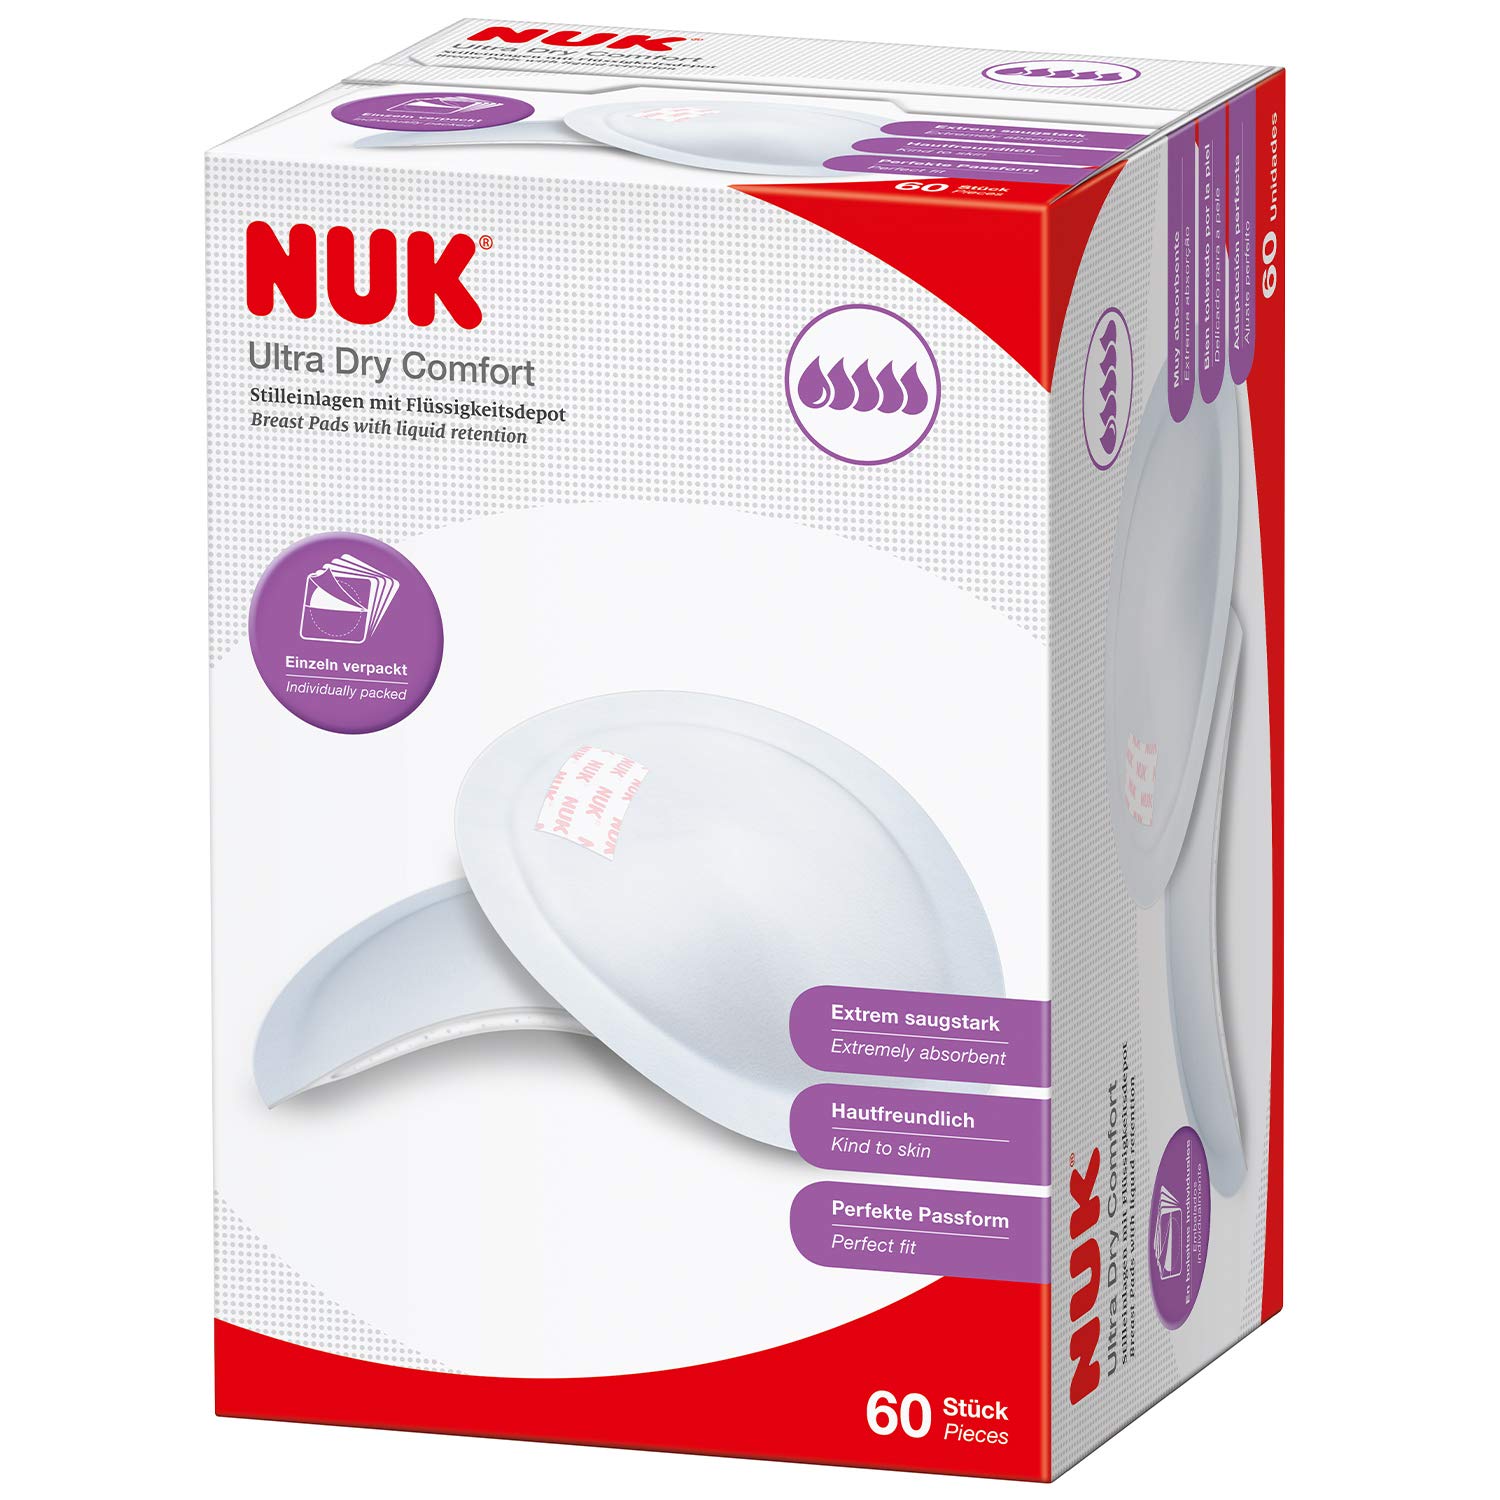 NUK Ultra Dry Comfort Disposable Nursing Pads